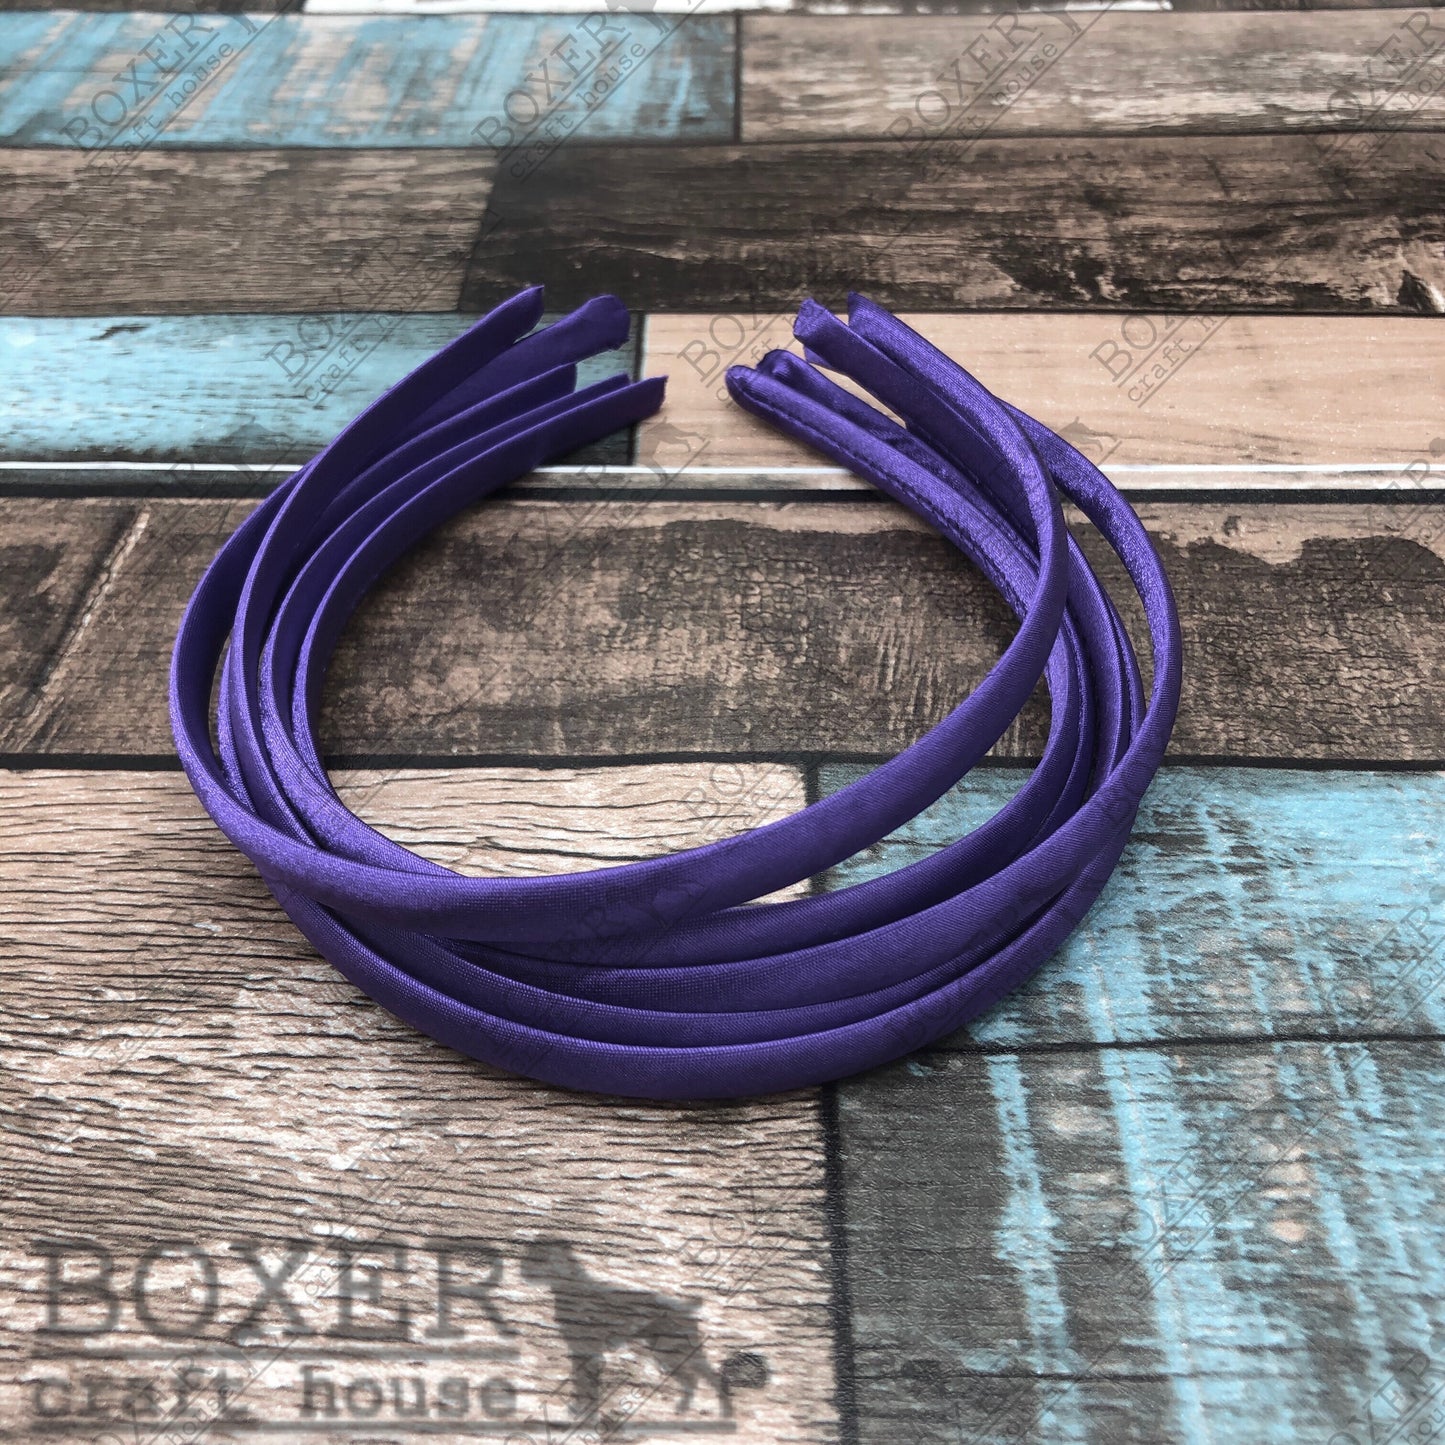 6 Count Purple Satin Headband